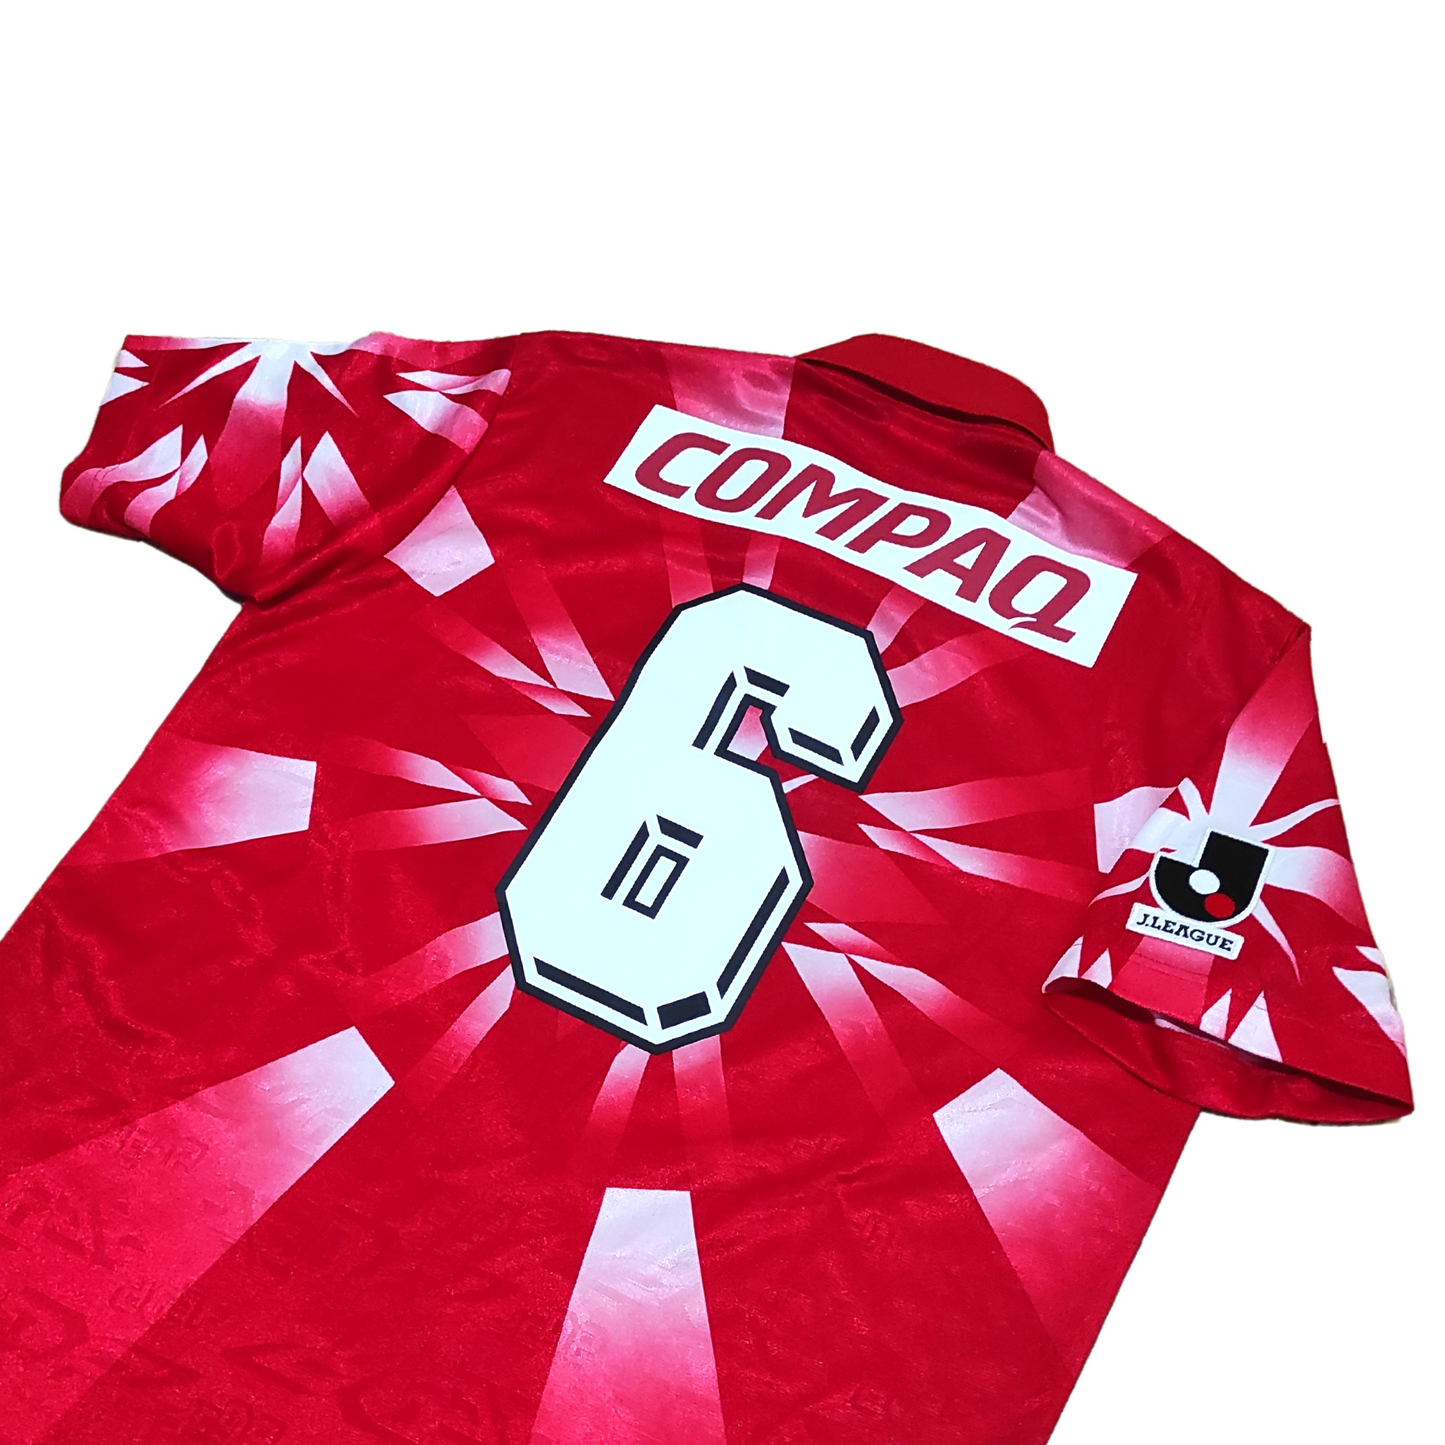 Urawa Red Diamonds Home Shirt 1995-1996 #6 (L)